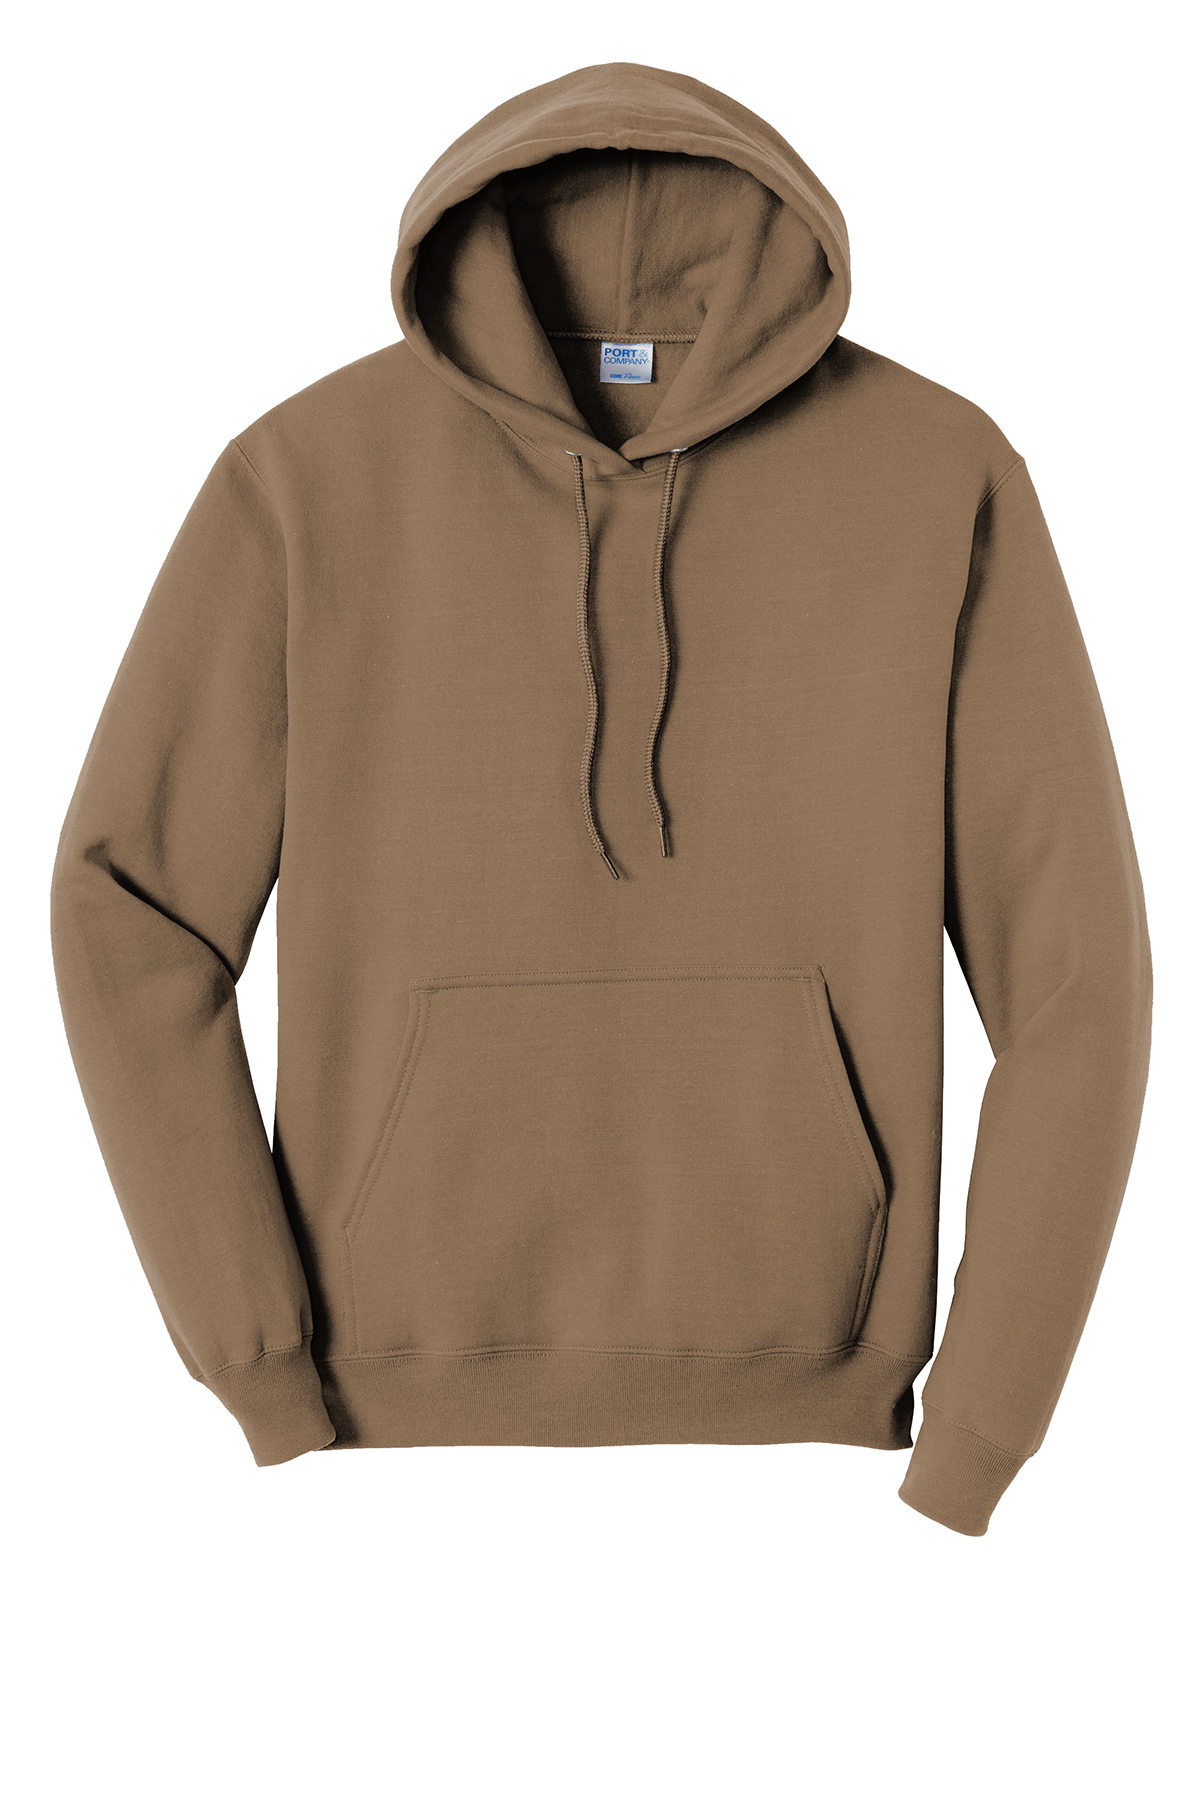 Sweatshirt Fleece Hooded | Company Company Core Port & Pullover | Product & Port